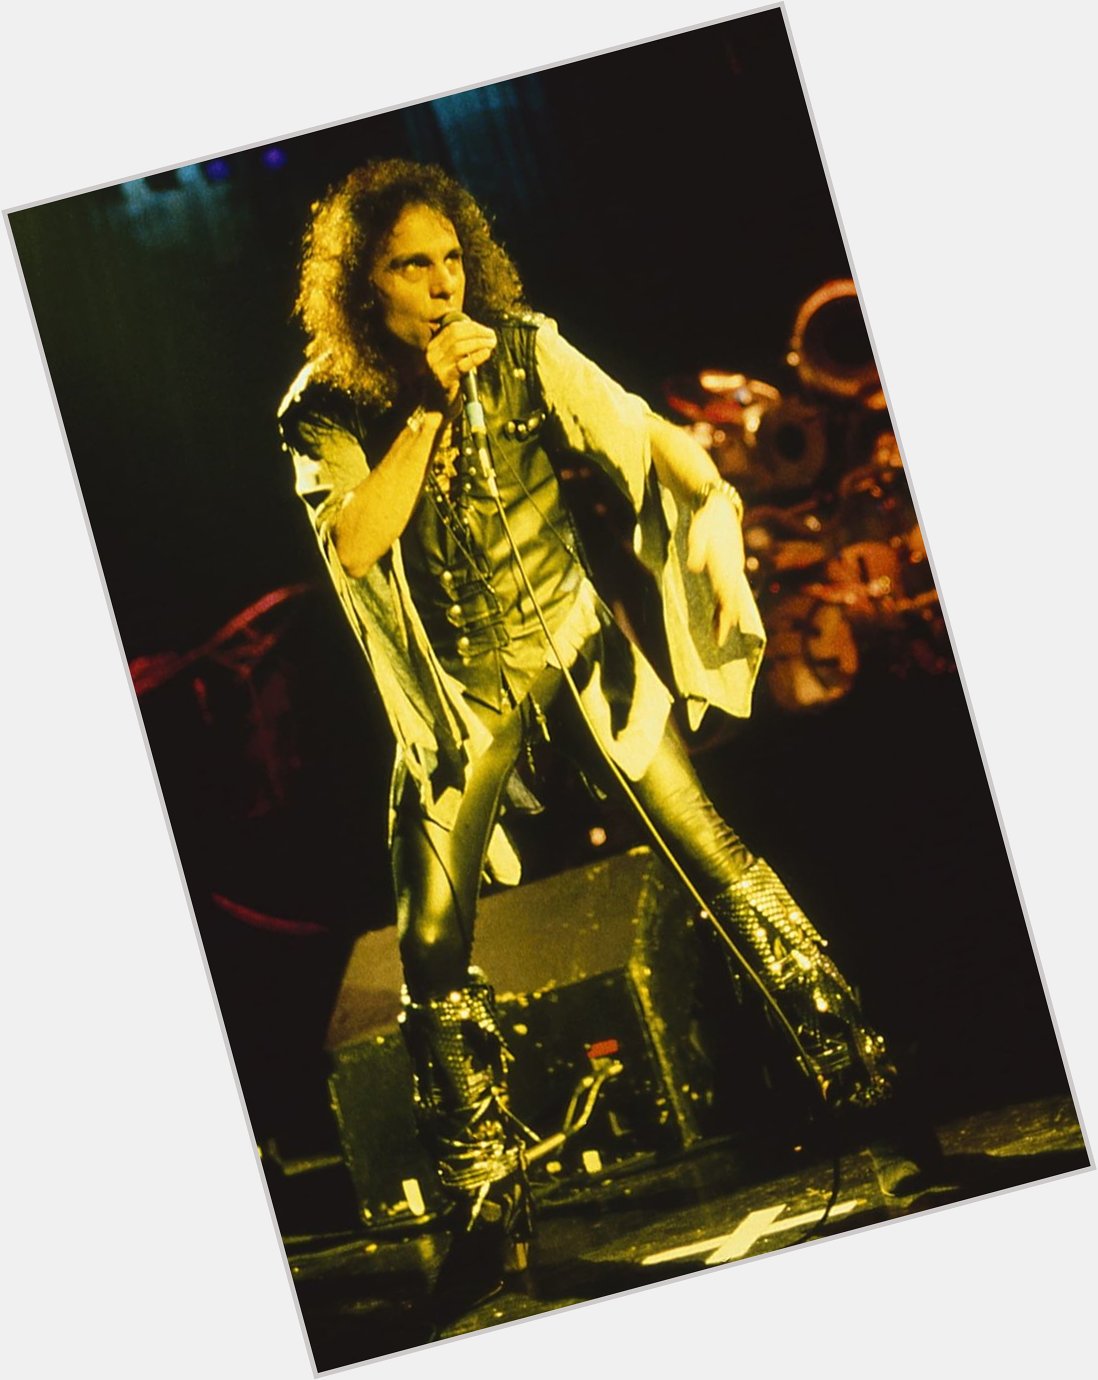 Happy Birthday Ronnie James Dio 

R.I.P (1942-2010)

Black Sabbath    